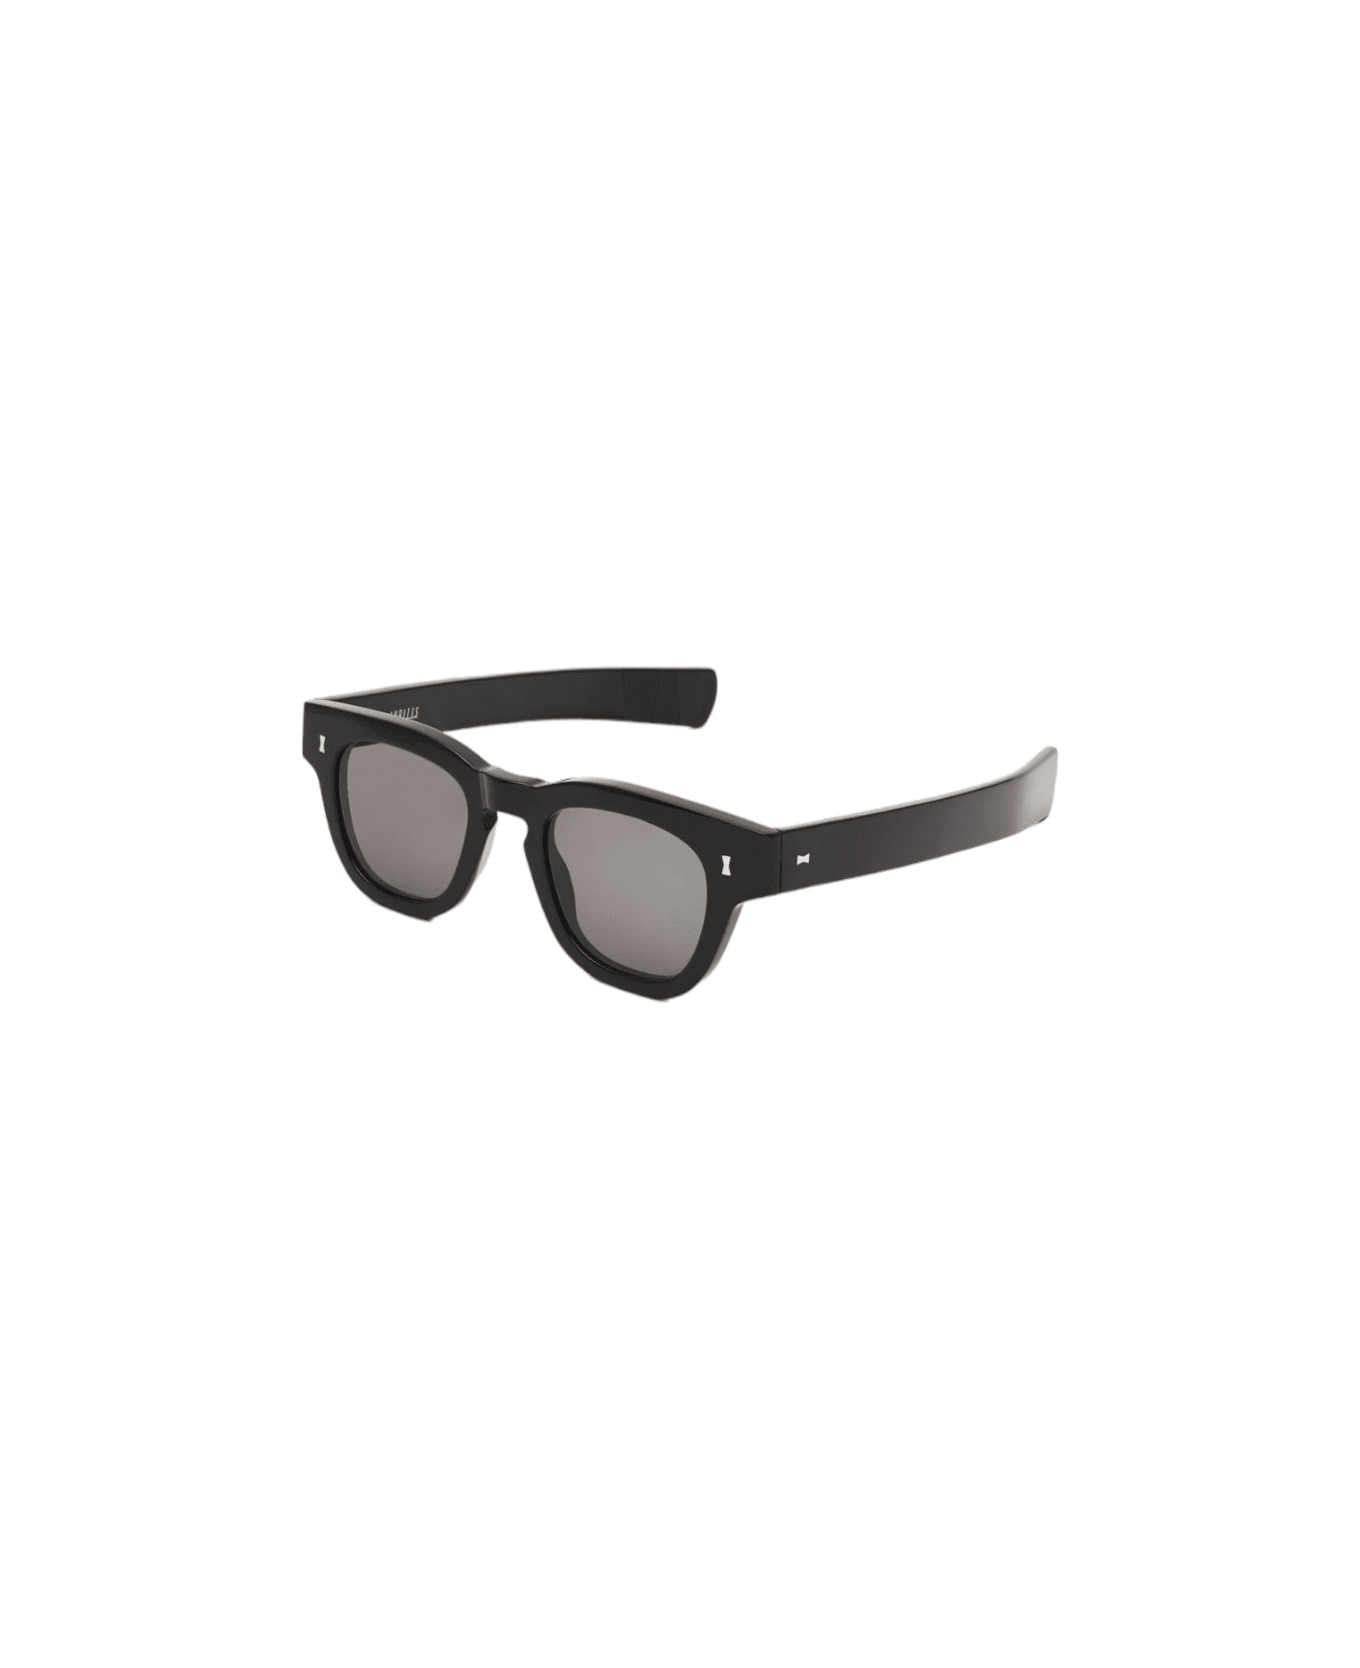 Cubitts Cruishank - Black Sunglasses